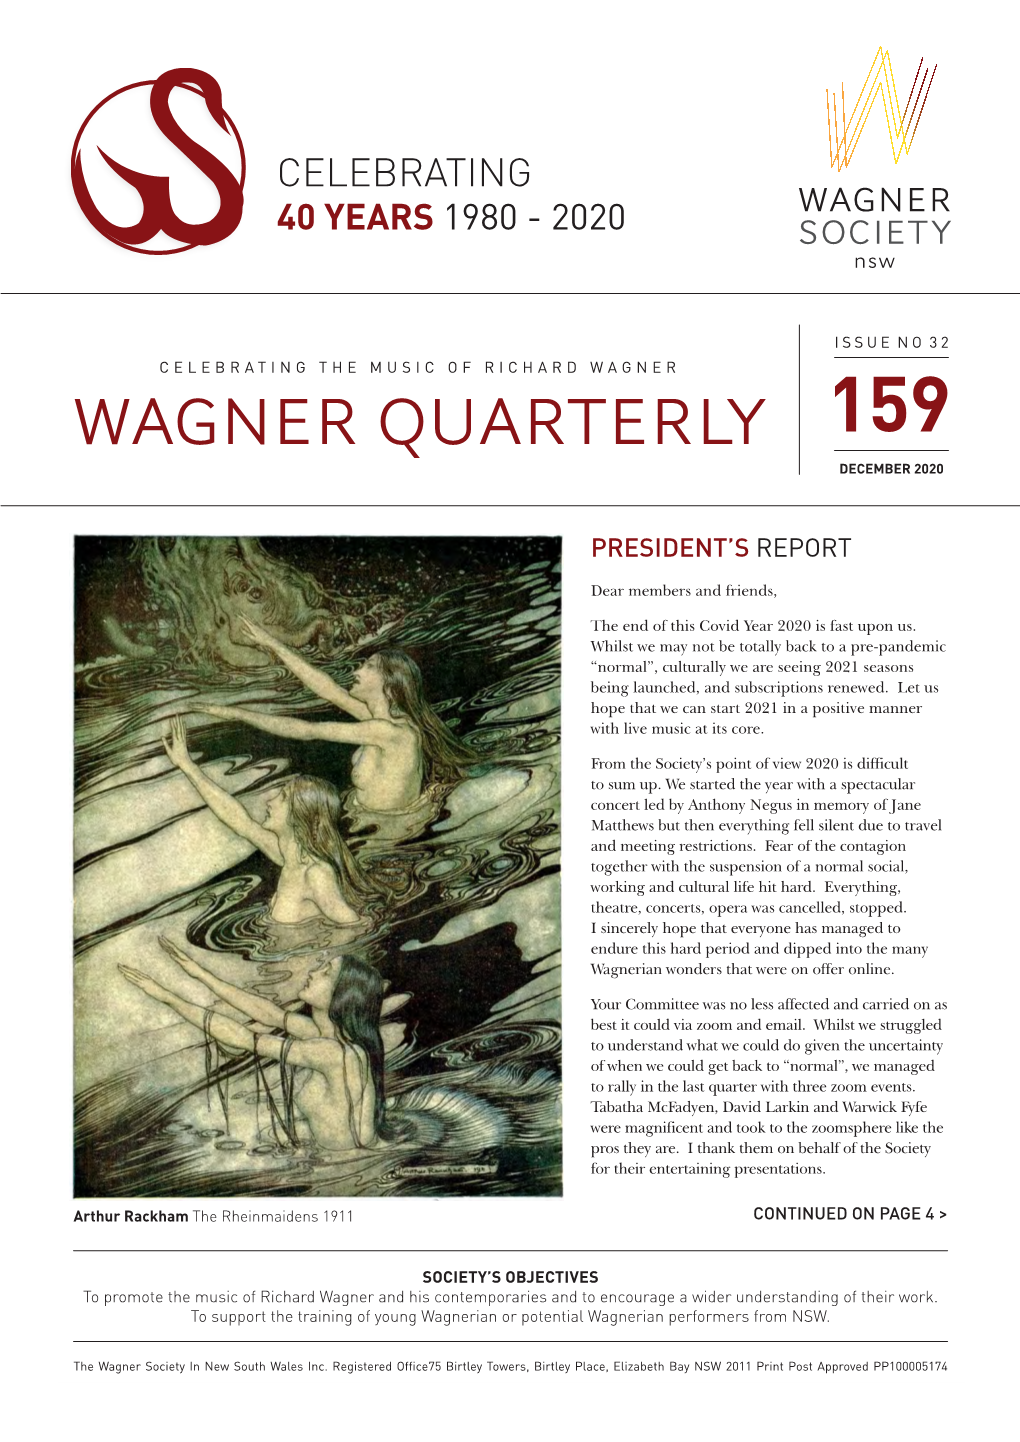 Wagner Quarterly 159 December 2020